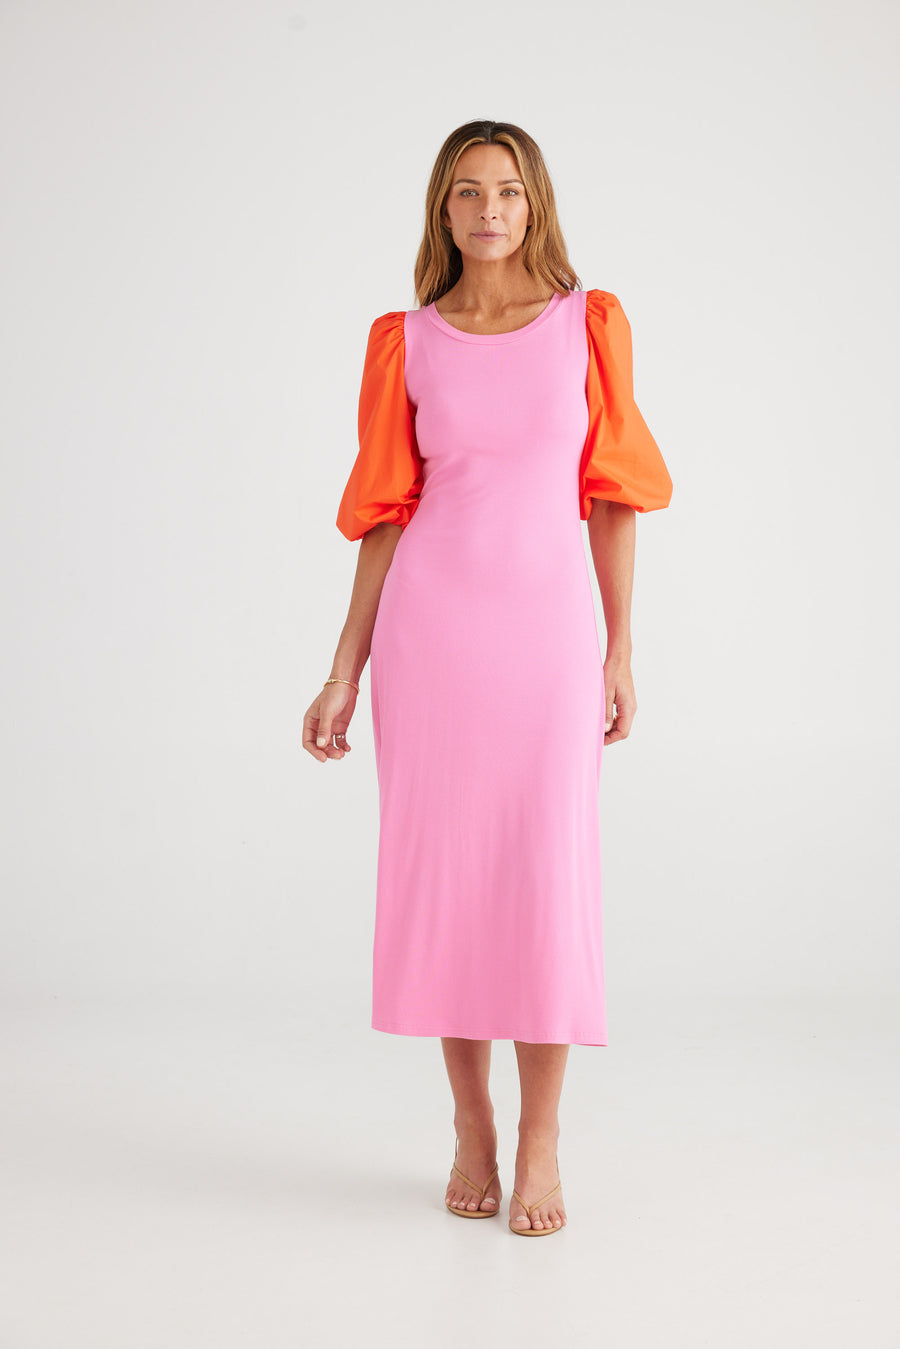 Remi Dress - Hot Pink + Mandarin